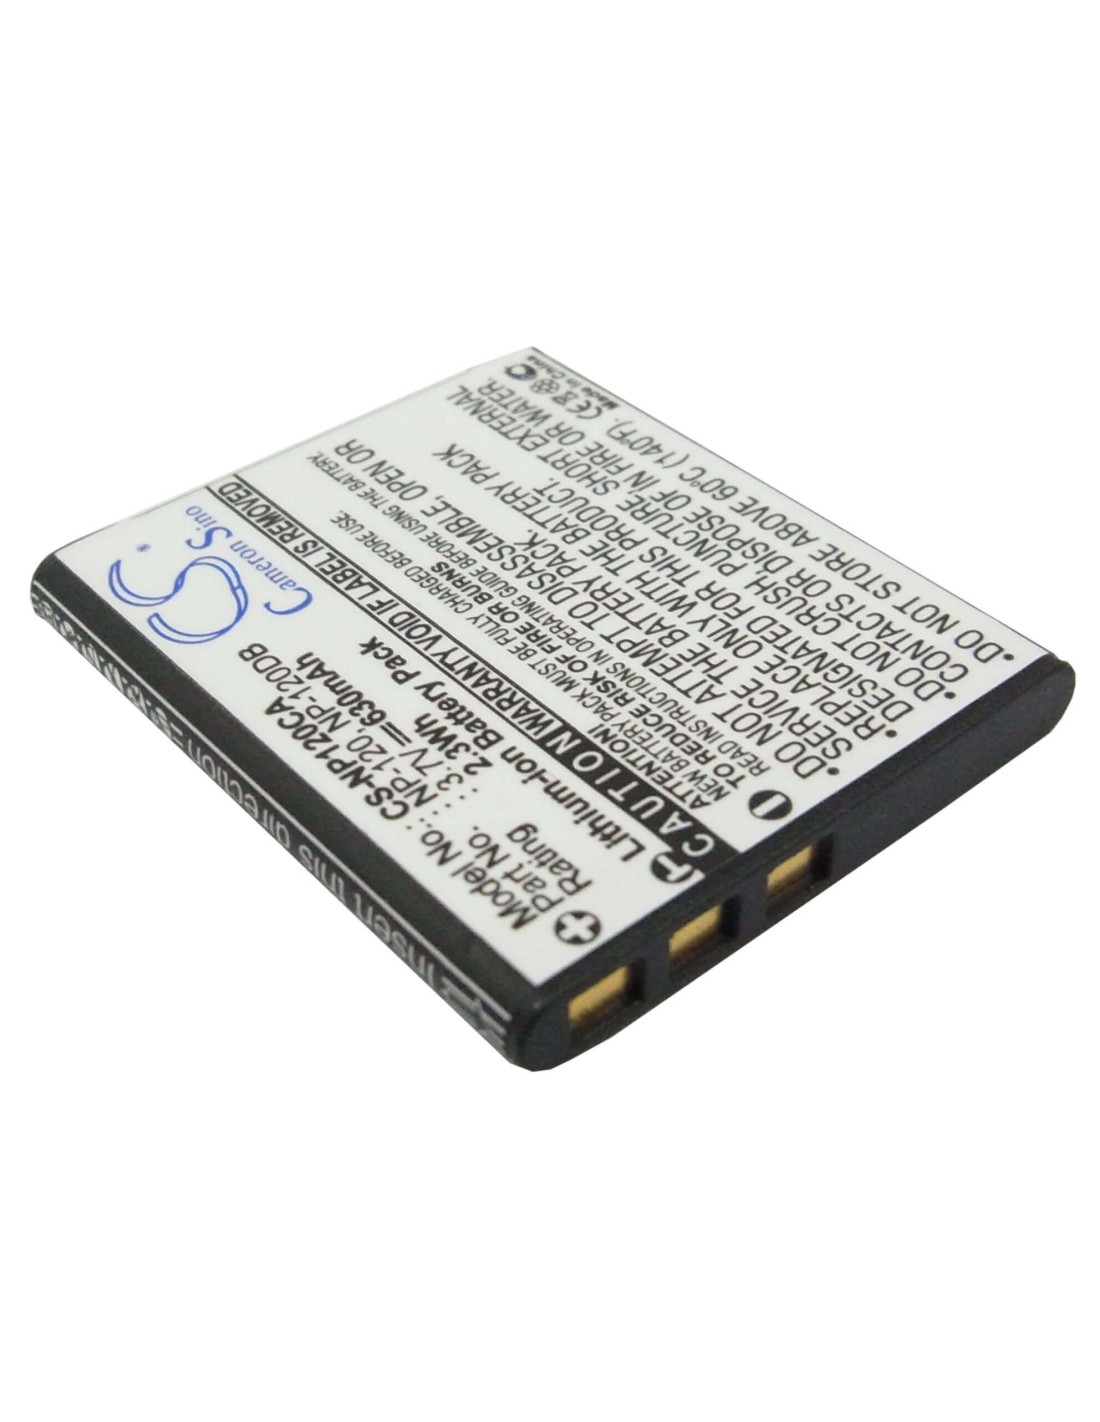 Battery for Casio Exilim Ex-ex-s200bk, Exilim Ex-s200, 3.7V, 630mAh - 2.33Wh